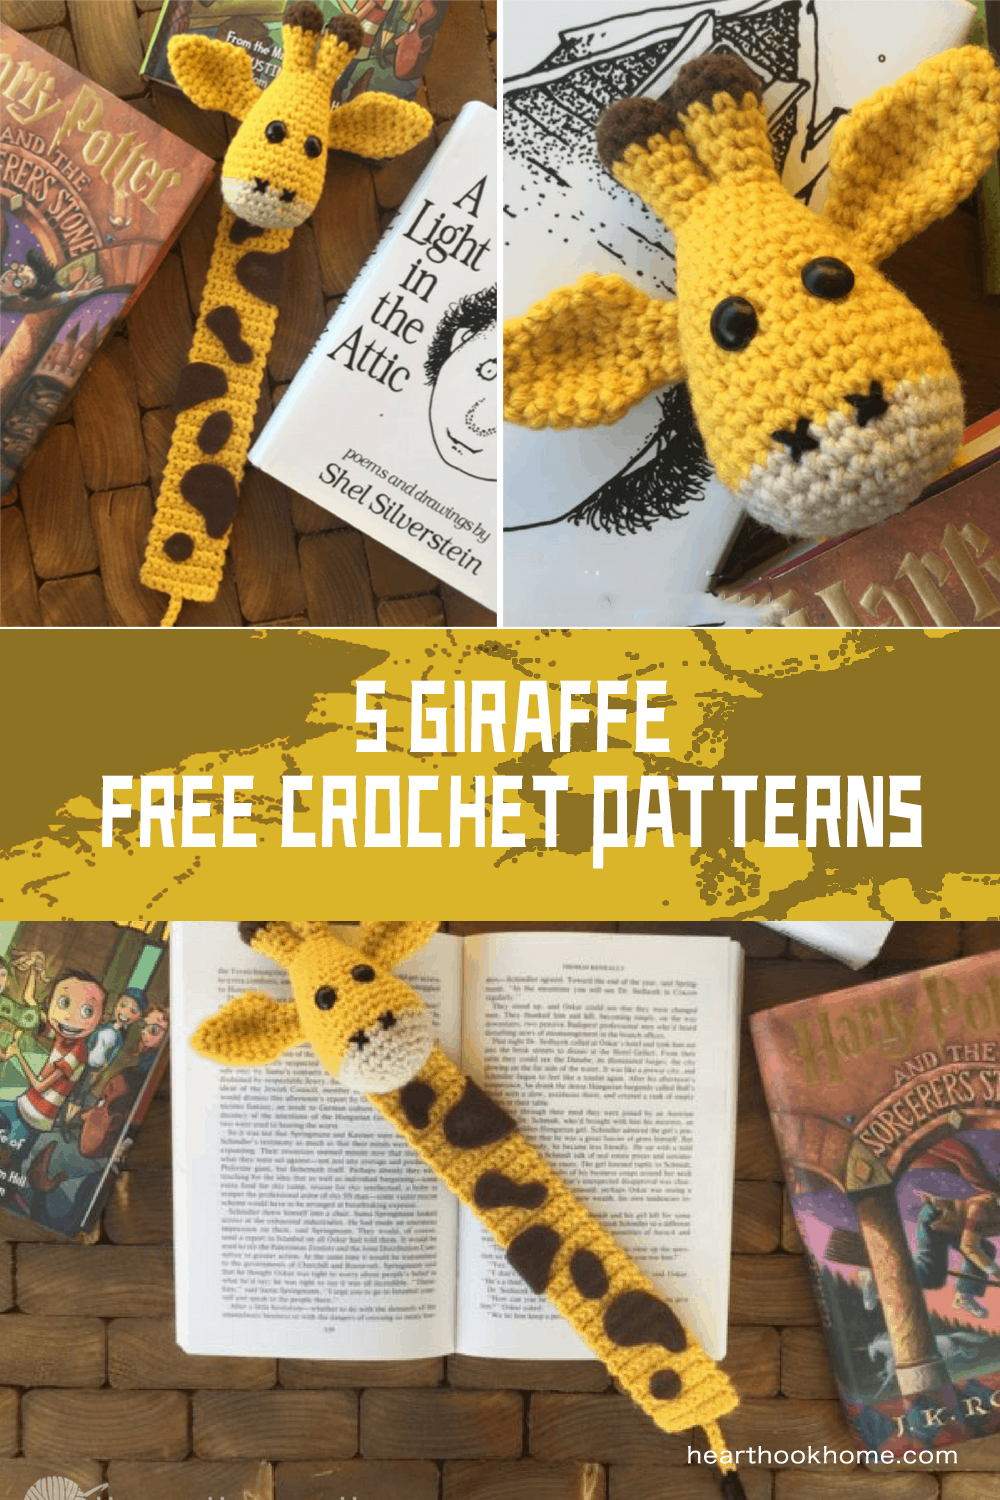  Giraffe bookmark FREE Crochet Patterns